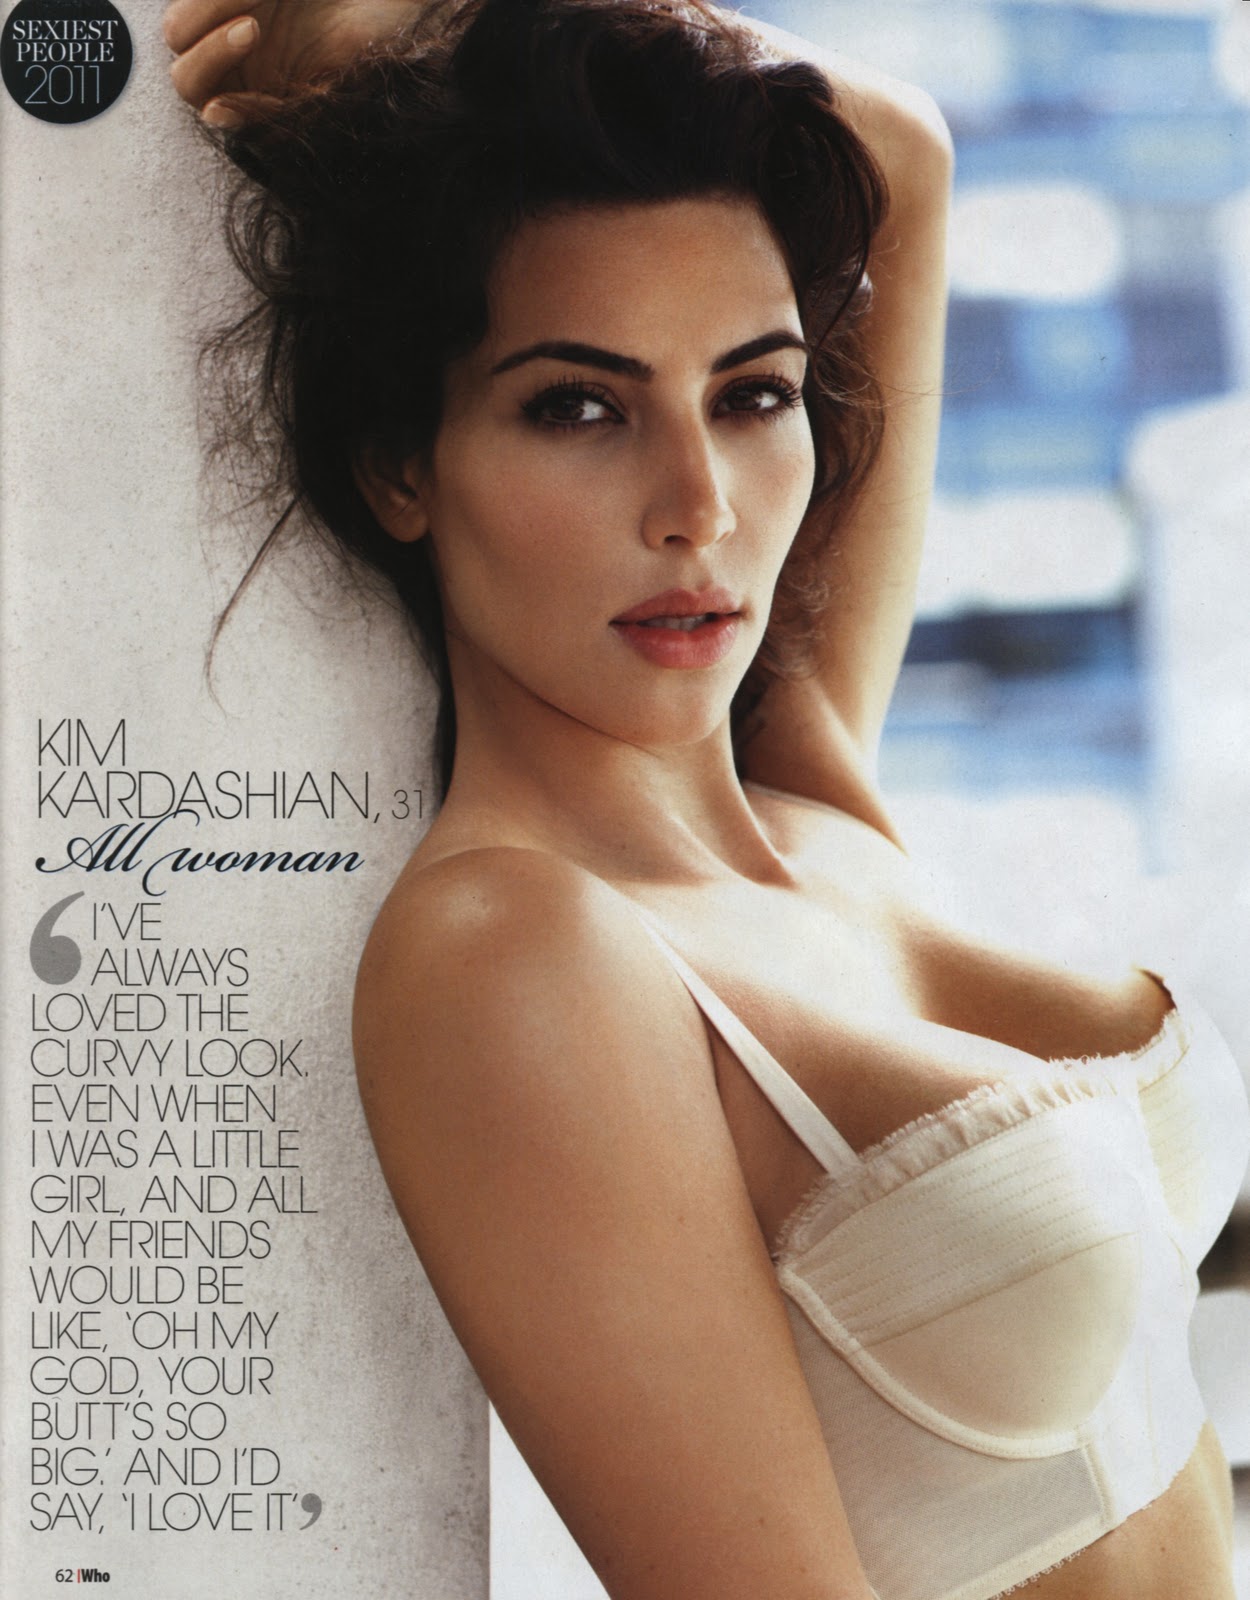 http://3.bp.blogspot.com/-d2KA6rqQ8Pw/TsjOhEGhXQI/AAAAAAAAE6c/fALwOfAeB38/s1600/Kim_Kardashian_Who_Magazine_Australia_Sexiest_People_Issue_2011_001.jpg